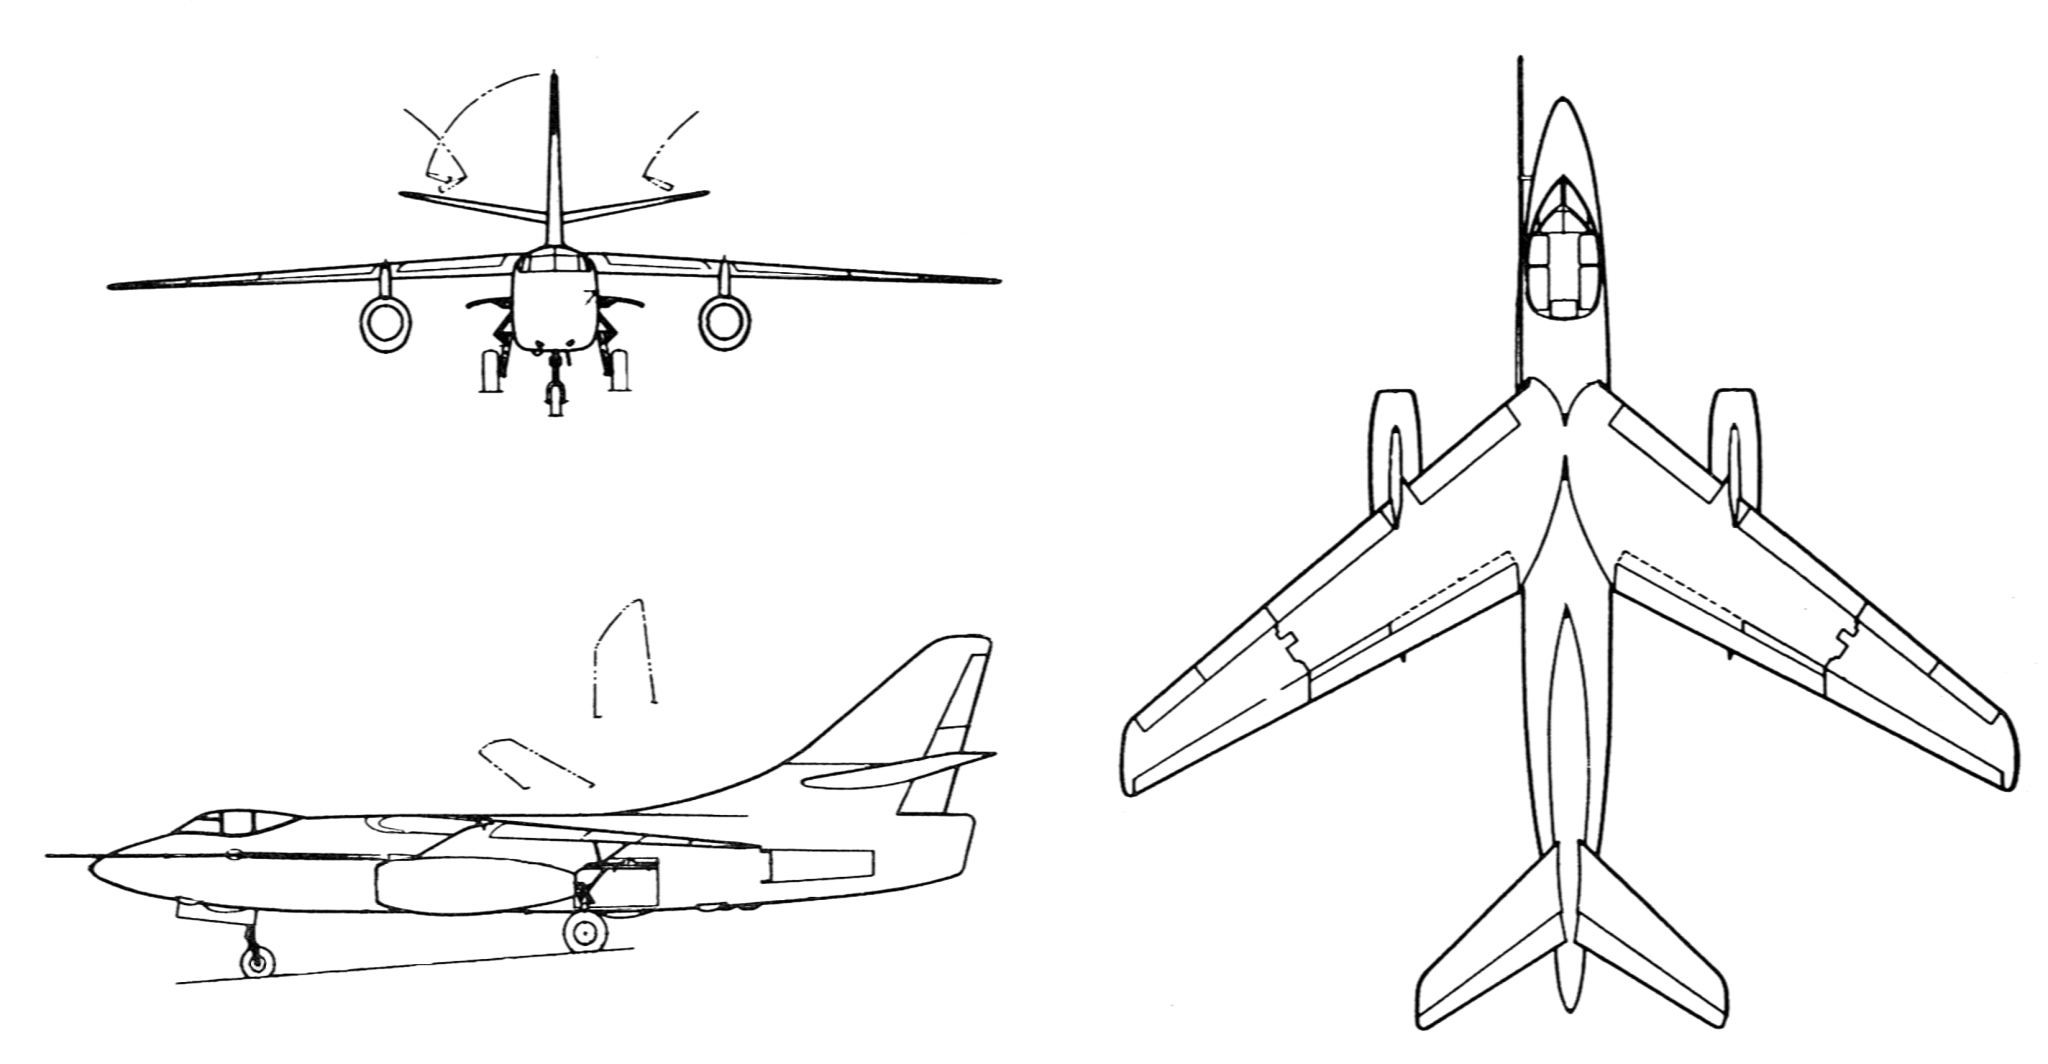 Douglas_A-3B_Skywarrior_3-view_drawing.p